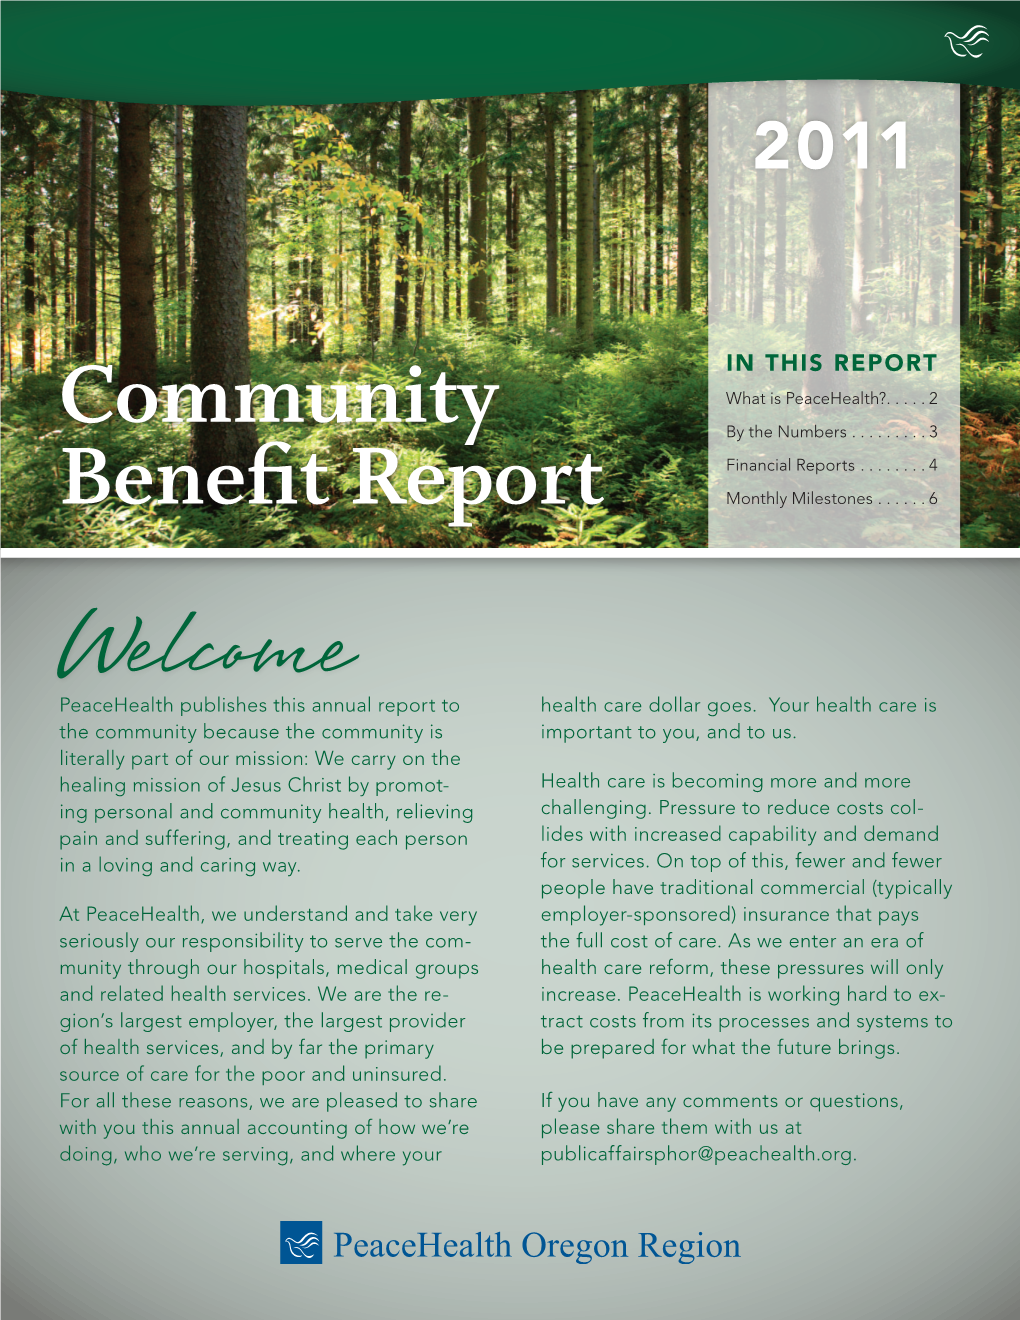 Community Benefit Report